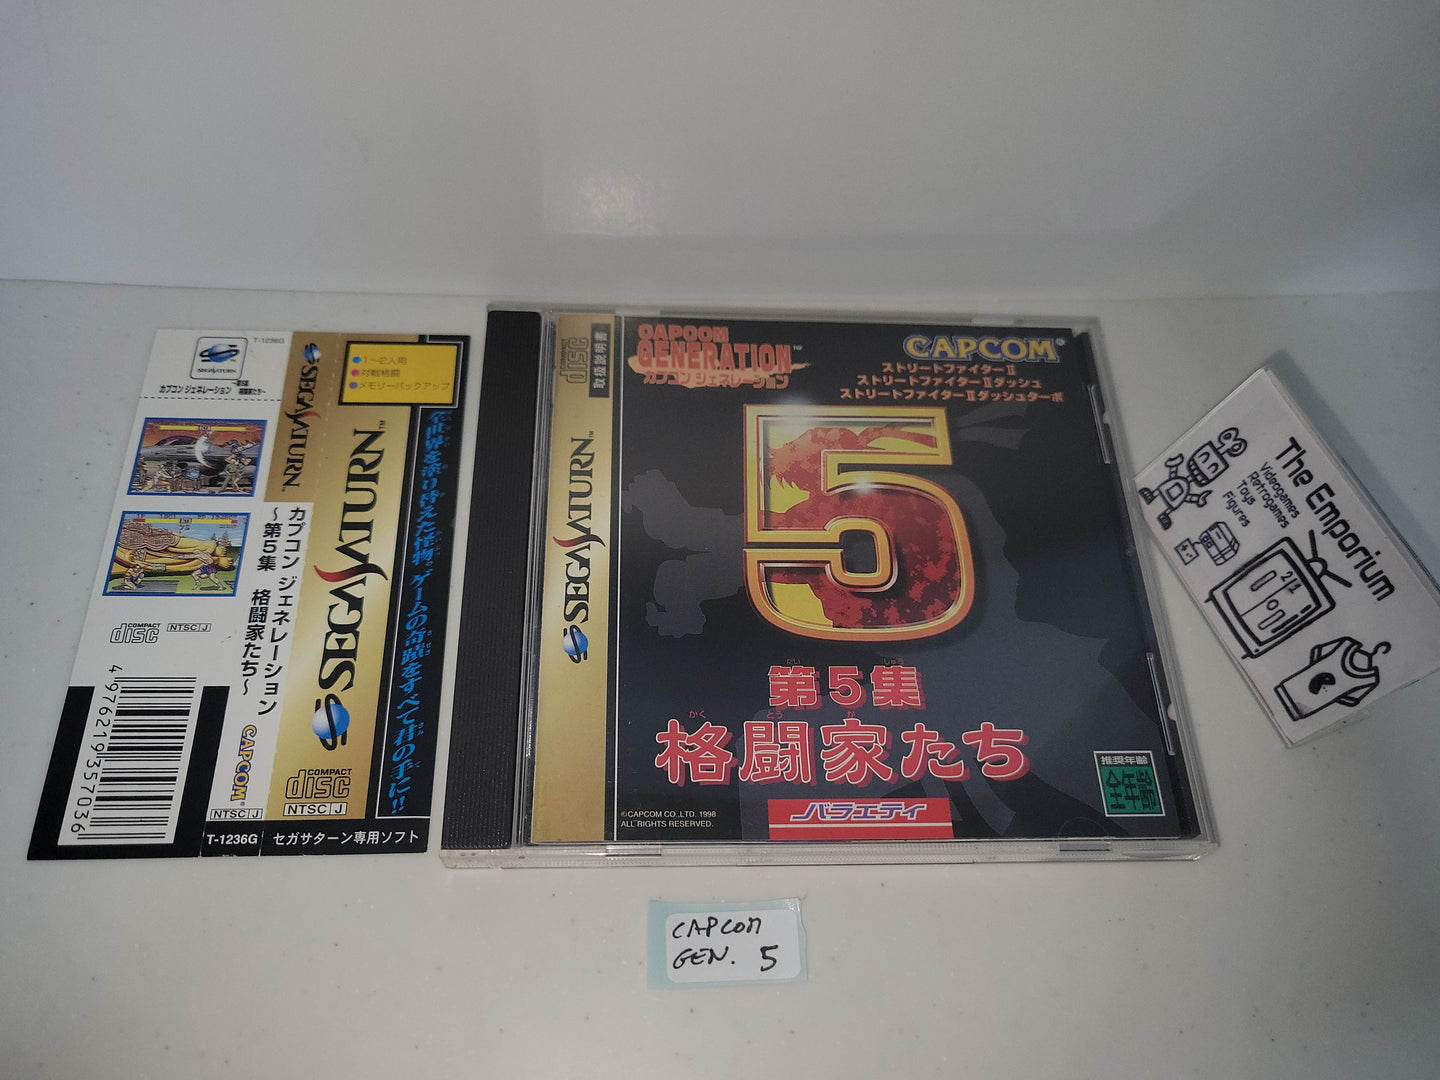 Capcom Generation 5 - Sega Saturn sat stn